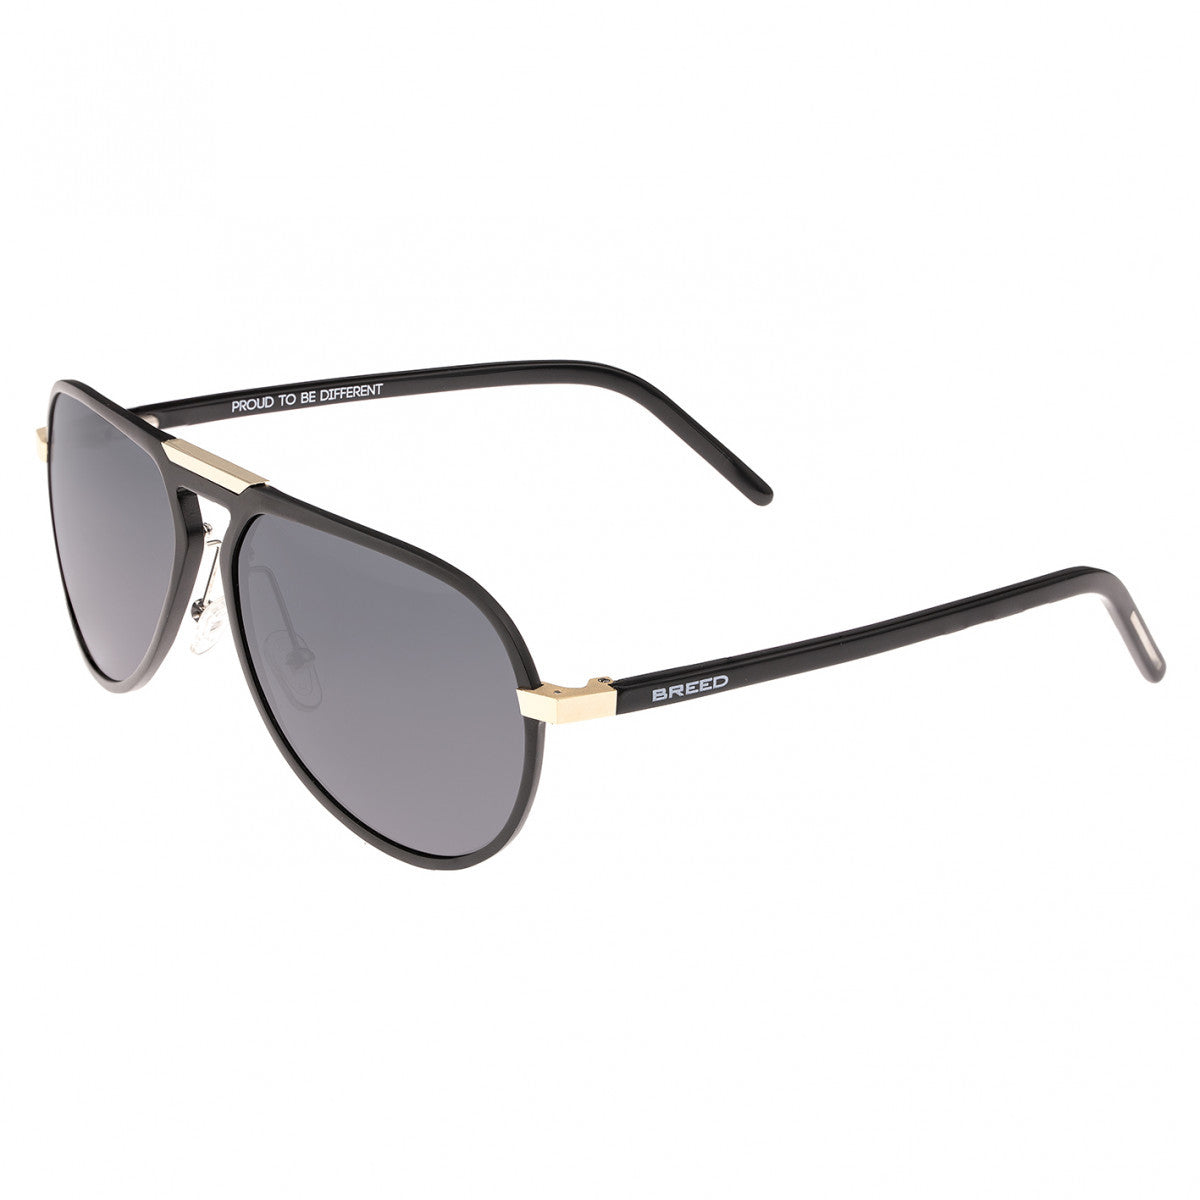 Breed Nova Aluminium Polarized Sunglasses - Black/Black - BSG018BK